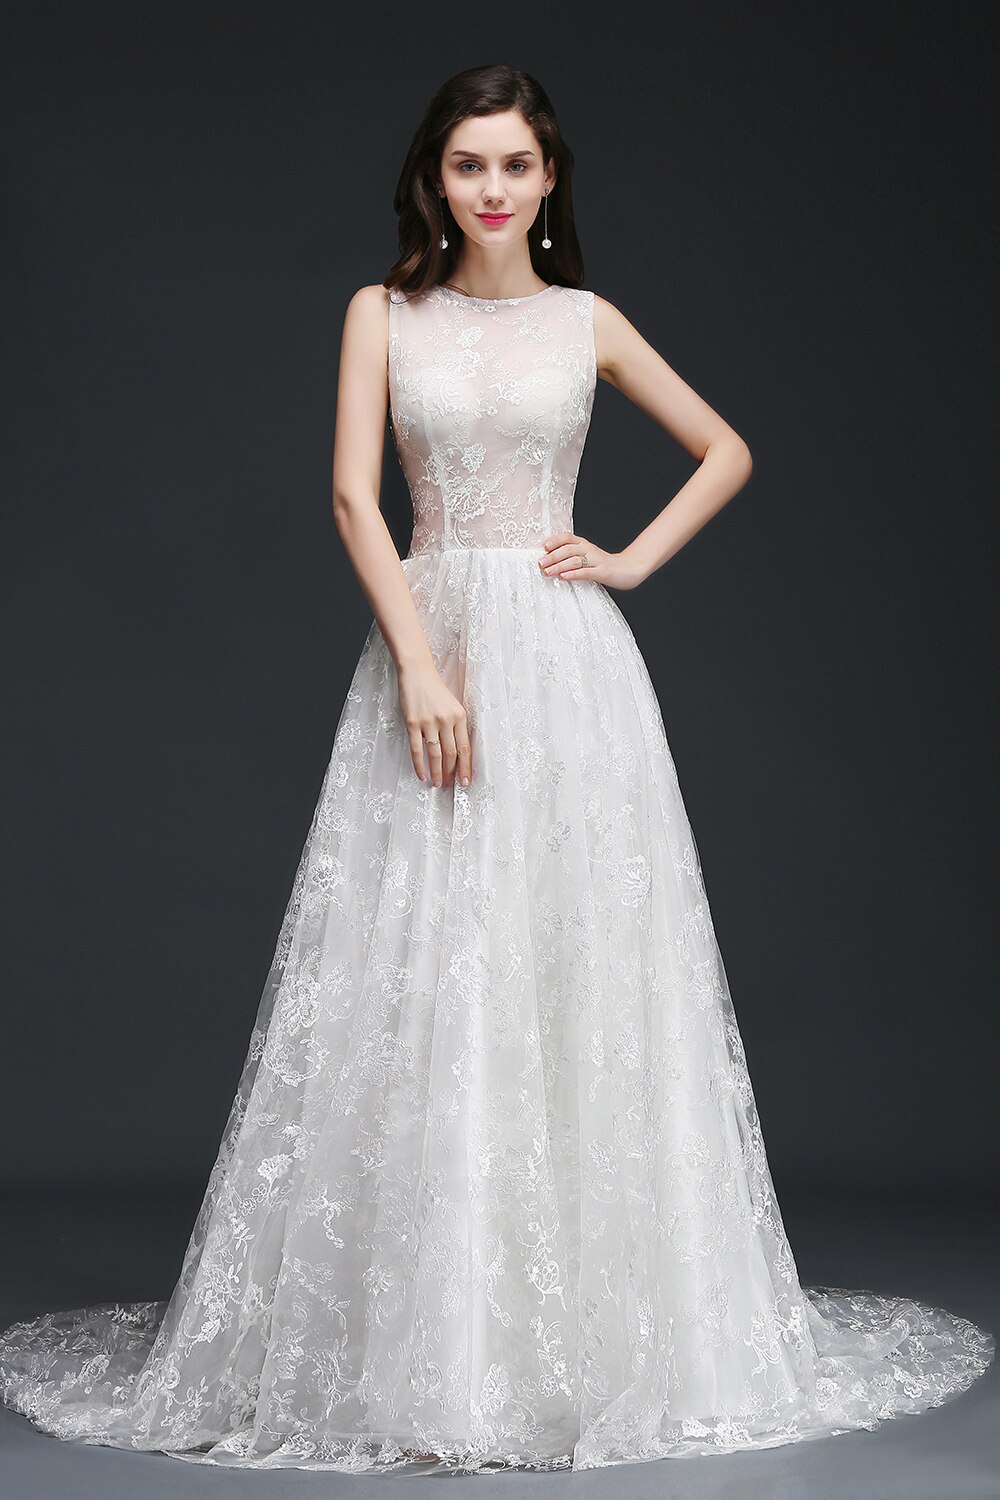 Women's Sleeveless Laced Bridal Dress